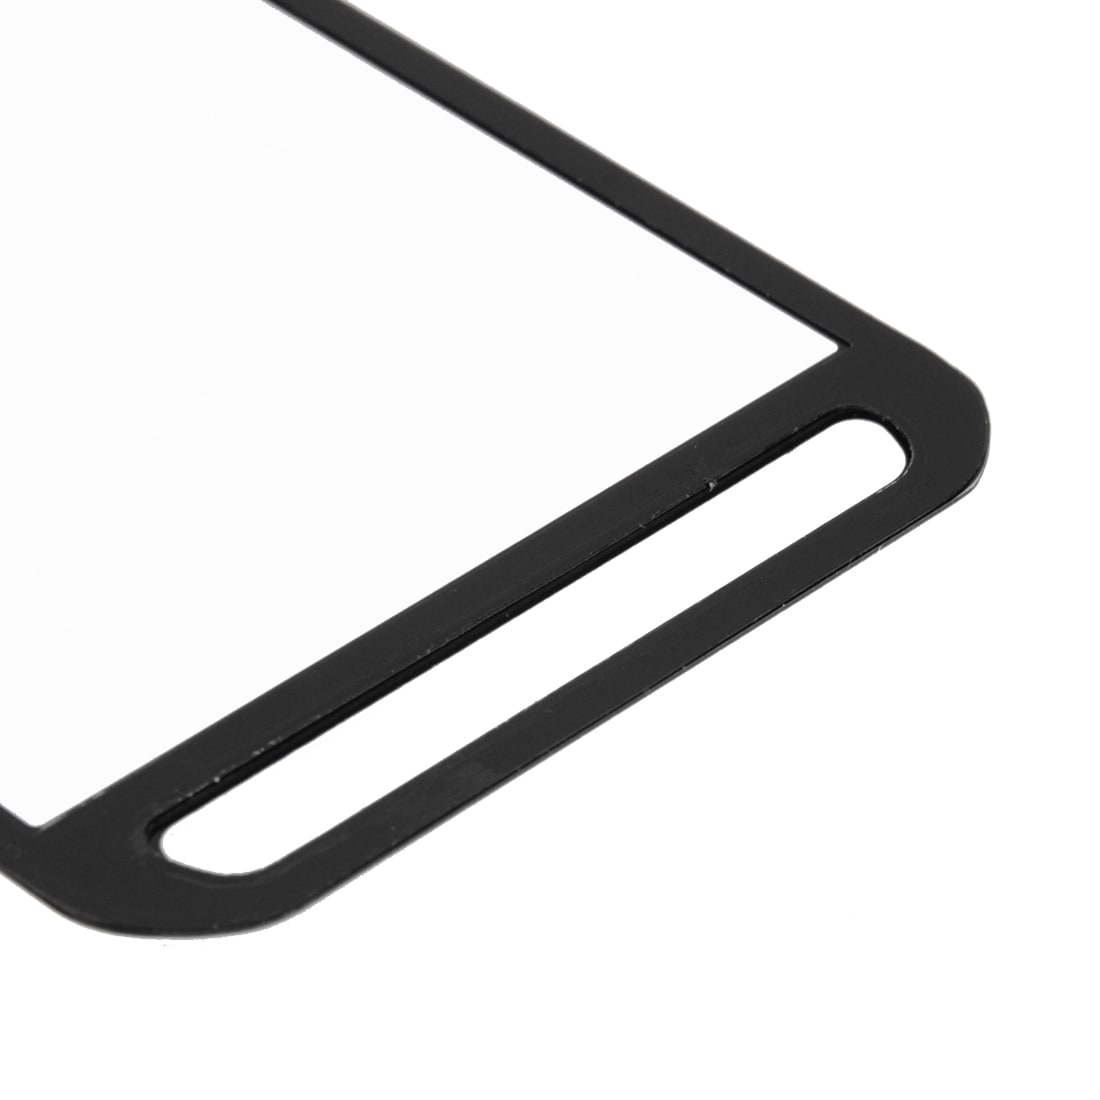 Touch + Displayglas till Samsung Galaxy Xcover 3 / G388 - Svart